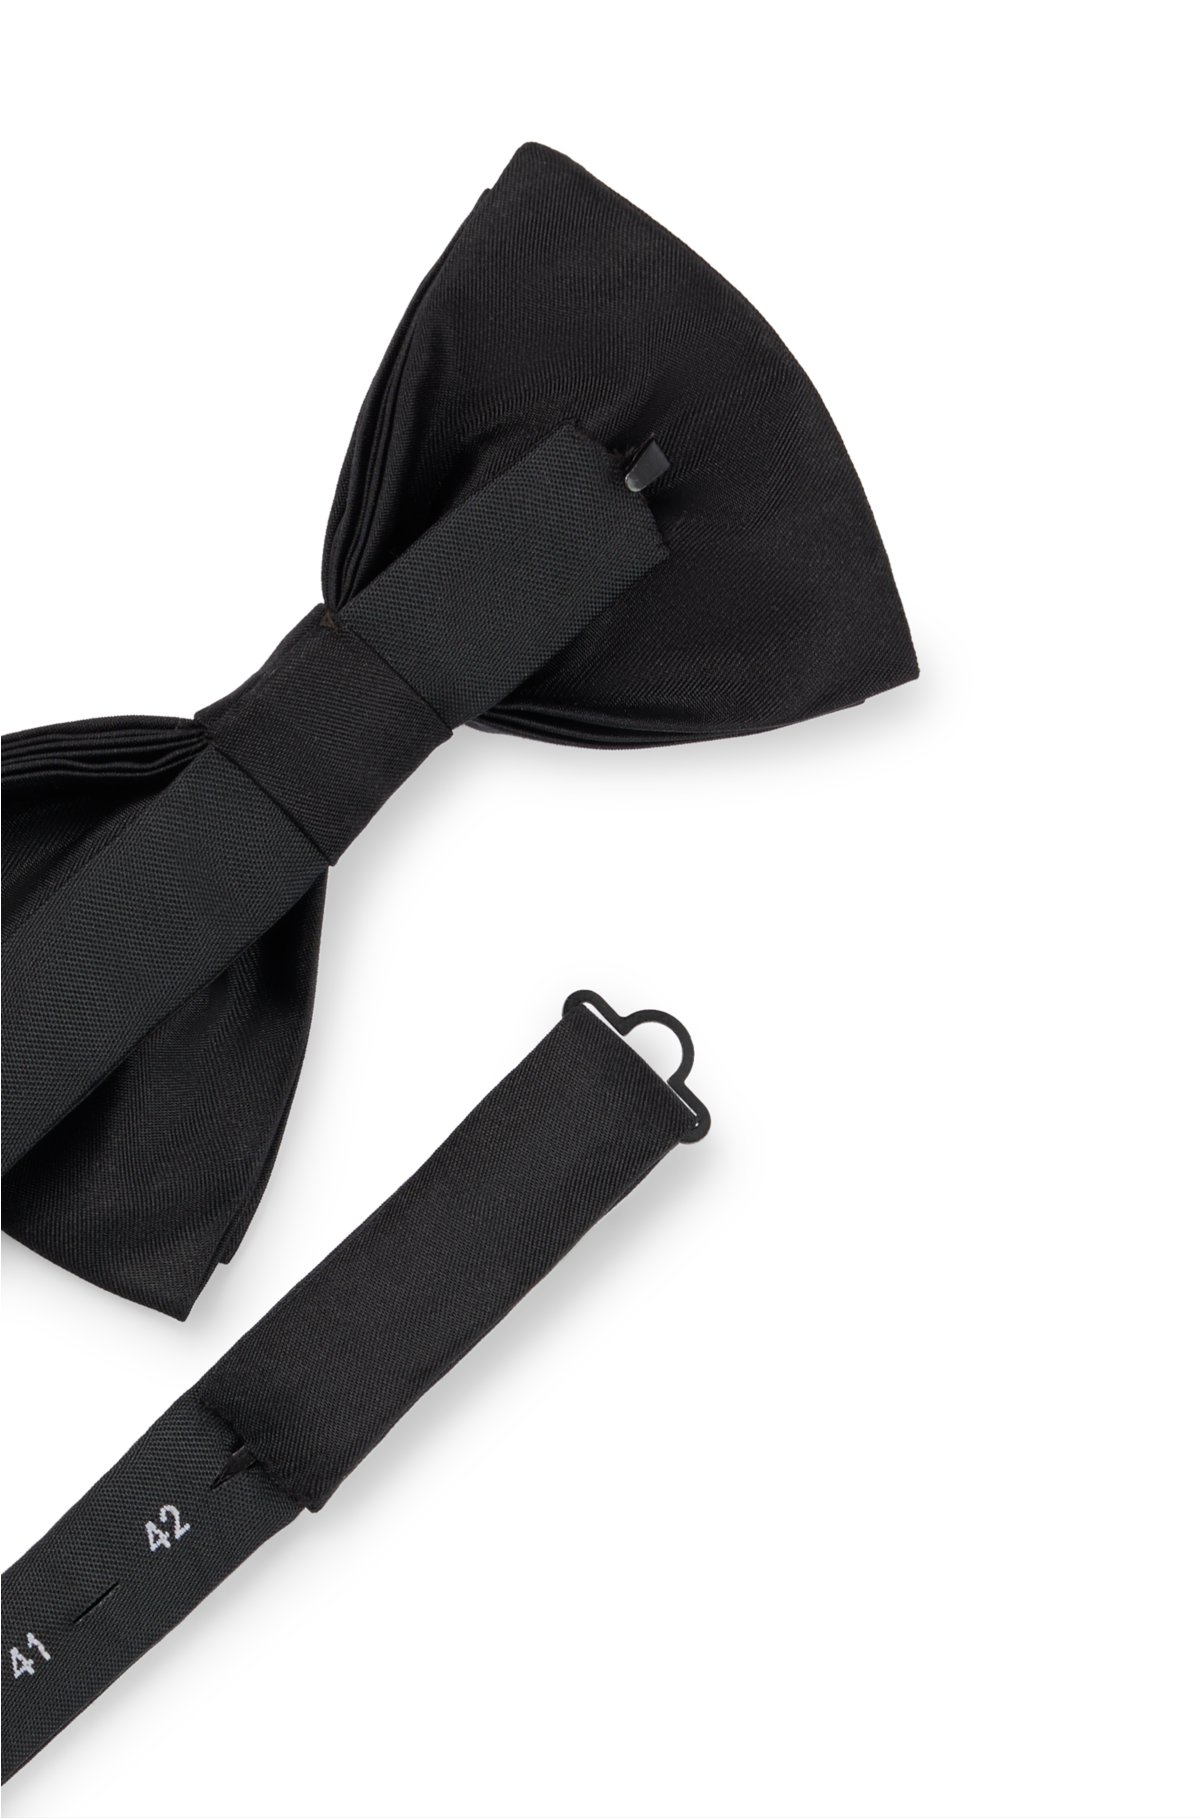 Monogram Dusk Bow Tie S00 - Accessories